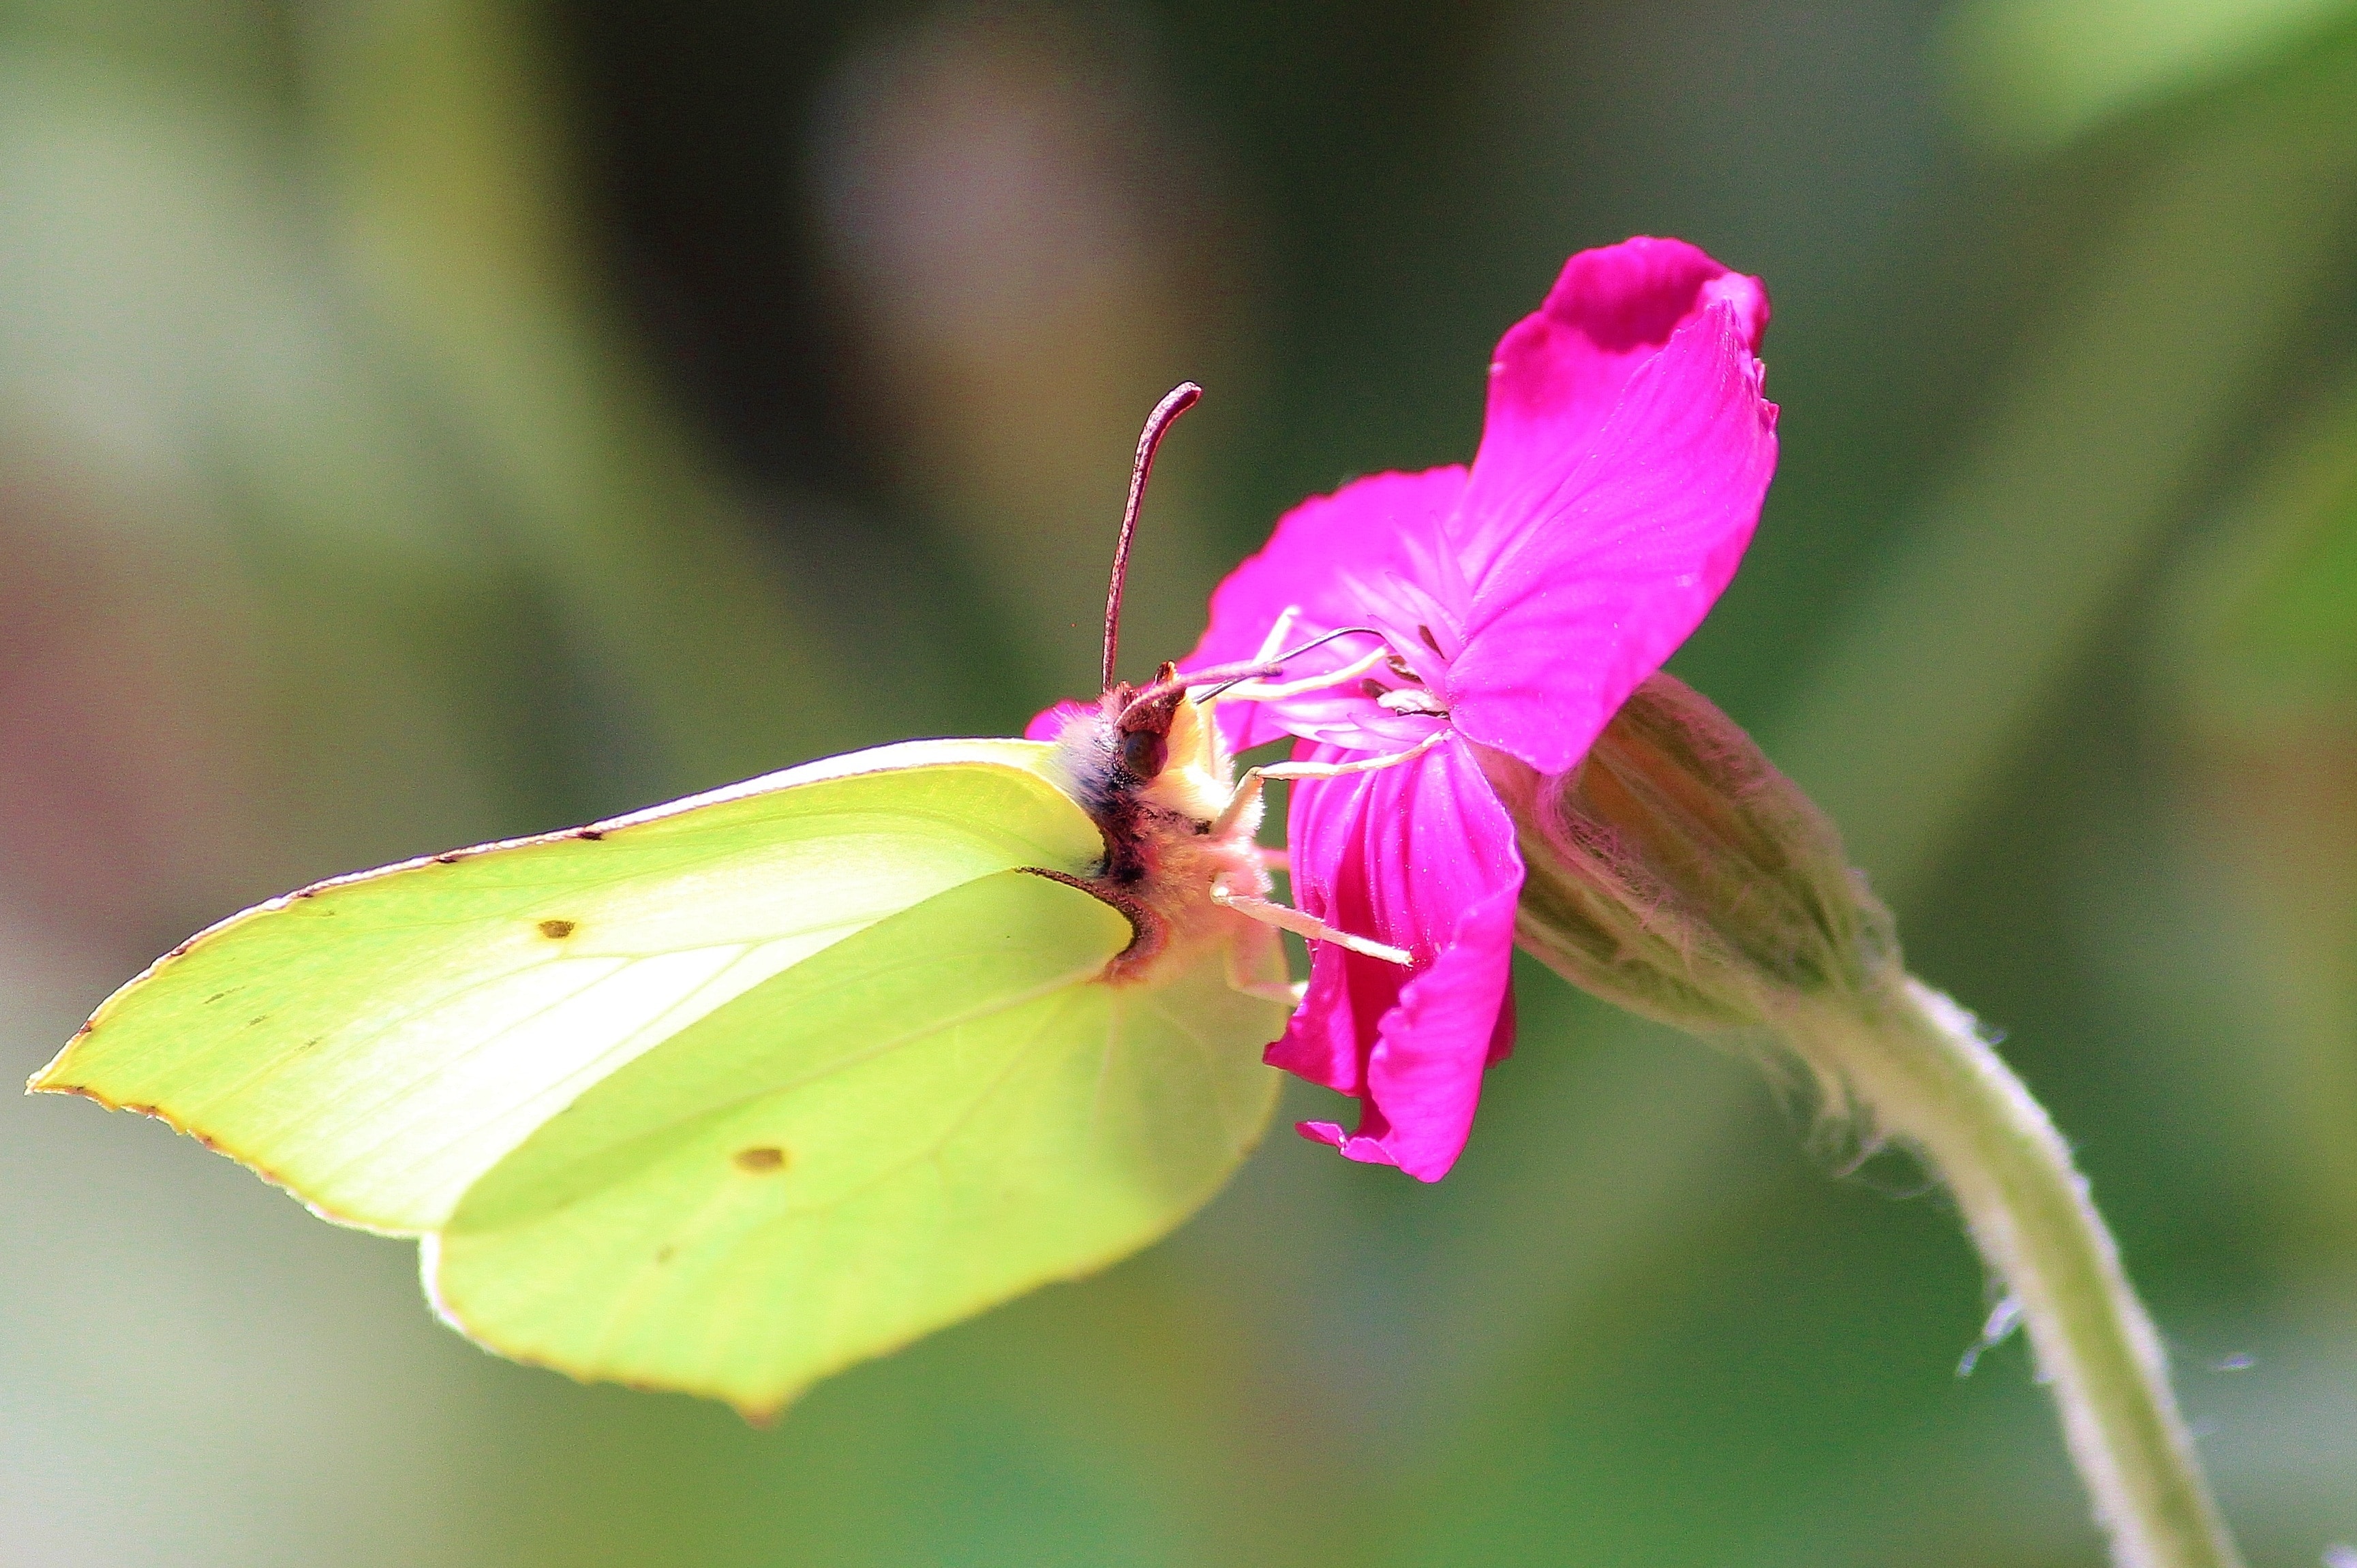 tilt shift photography of bug and pink flower